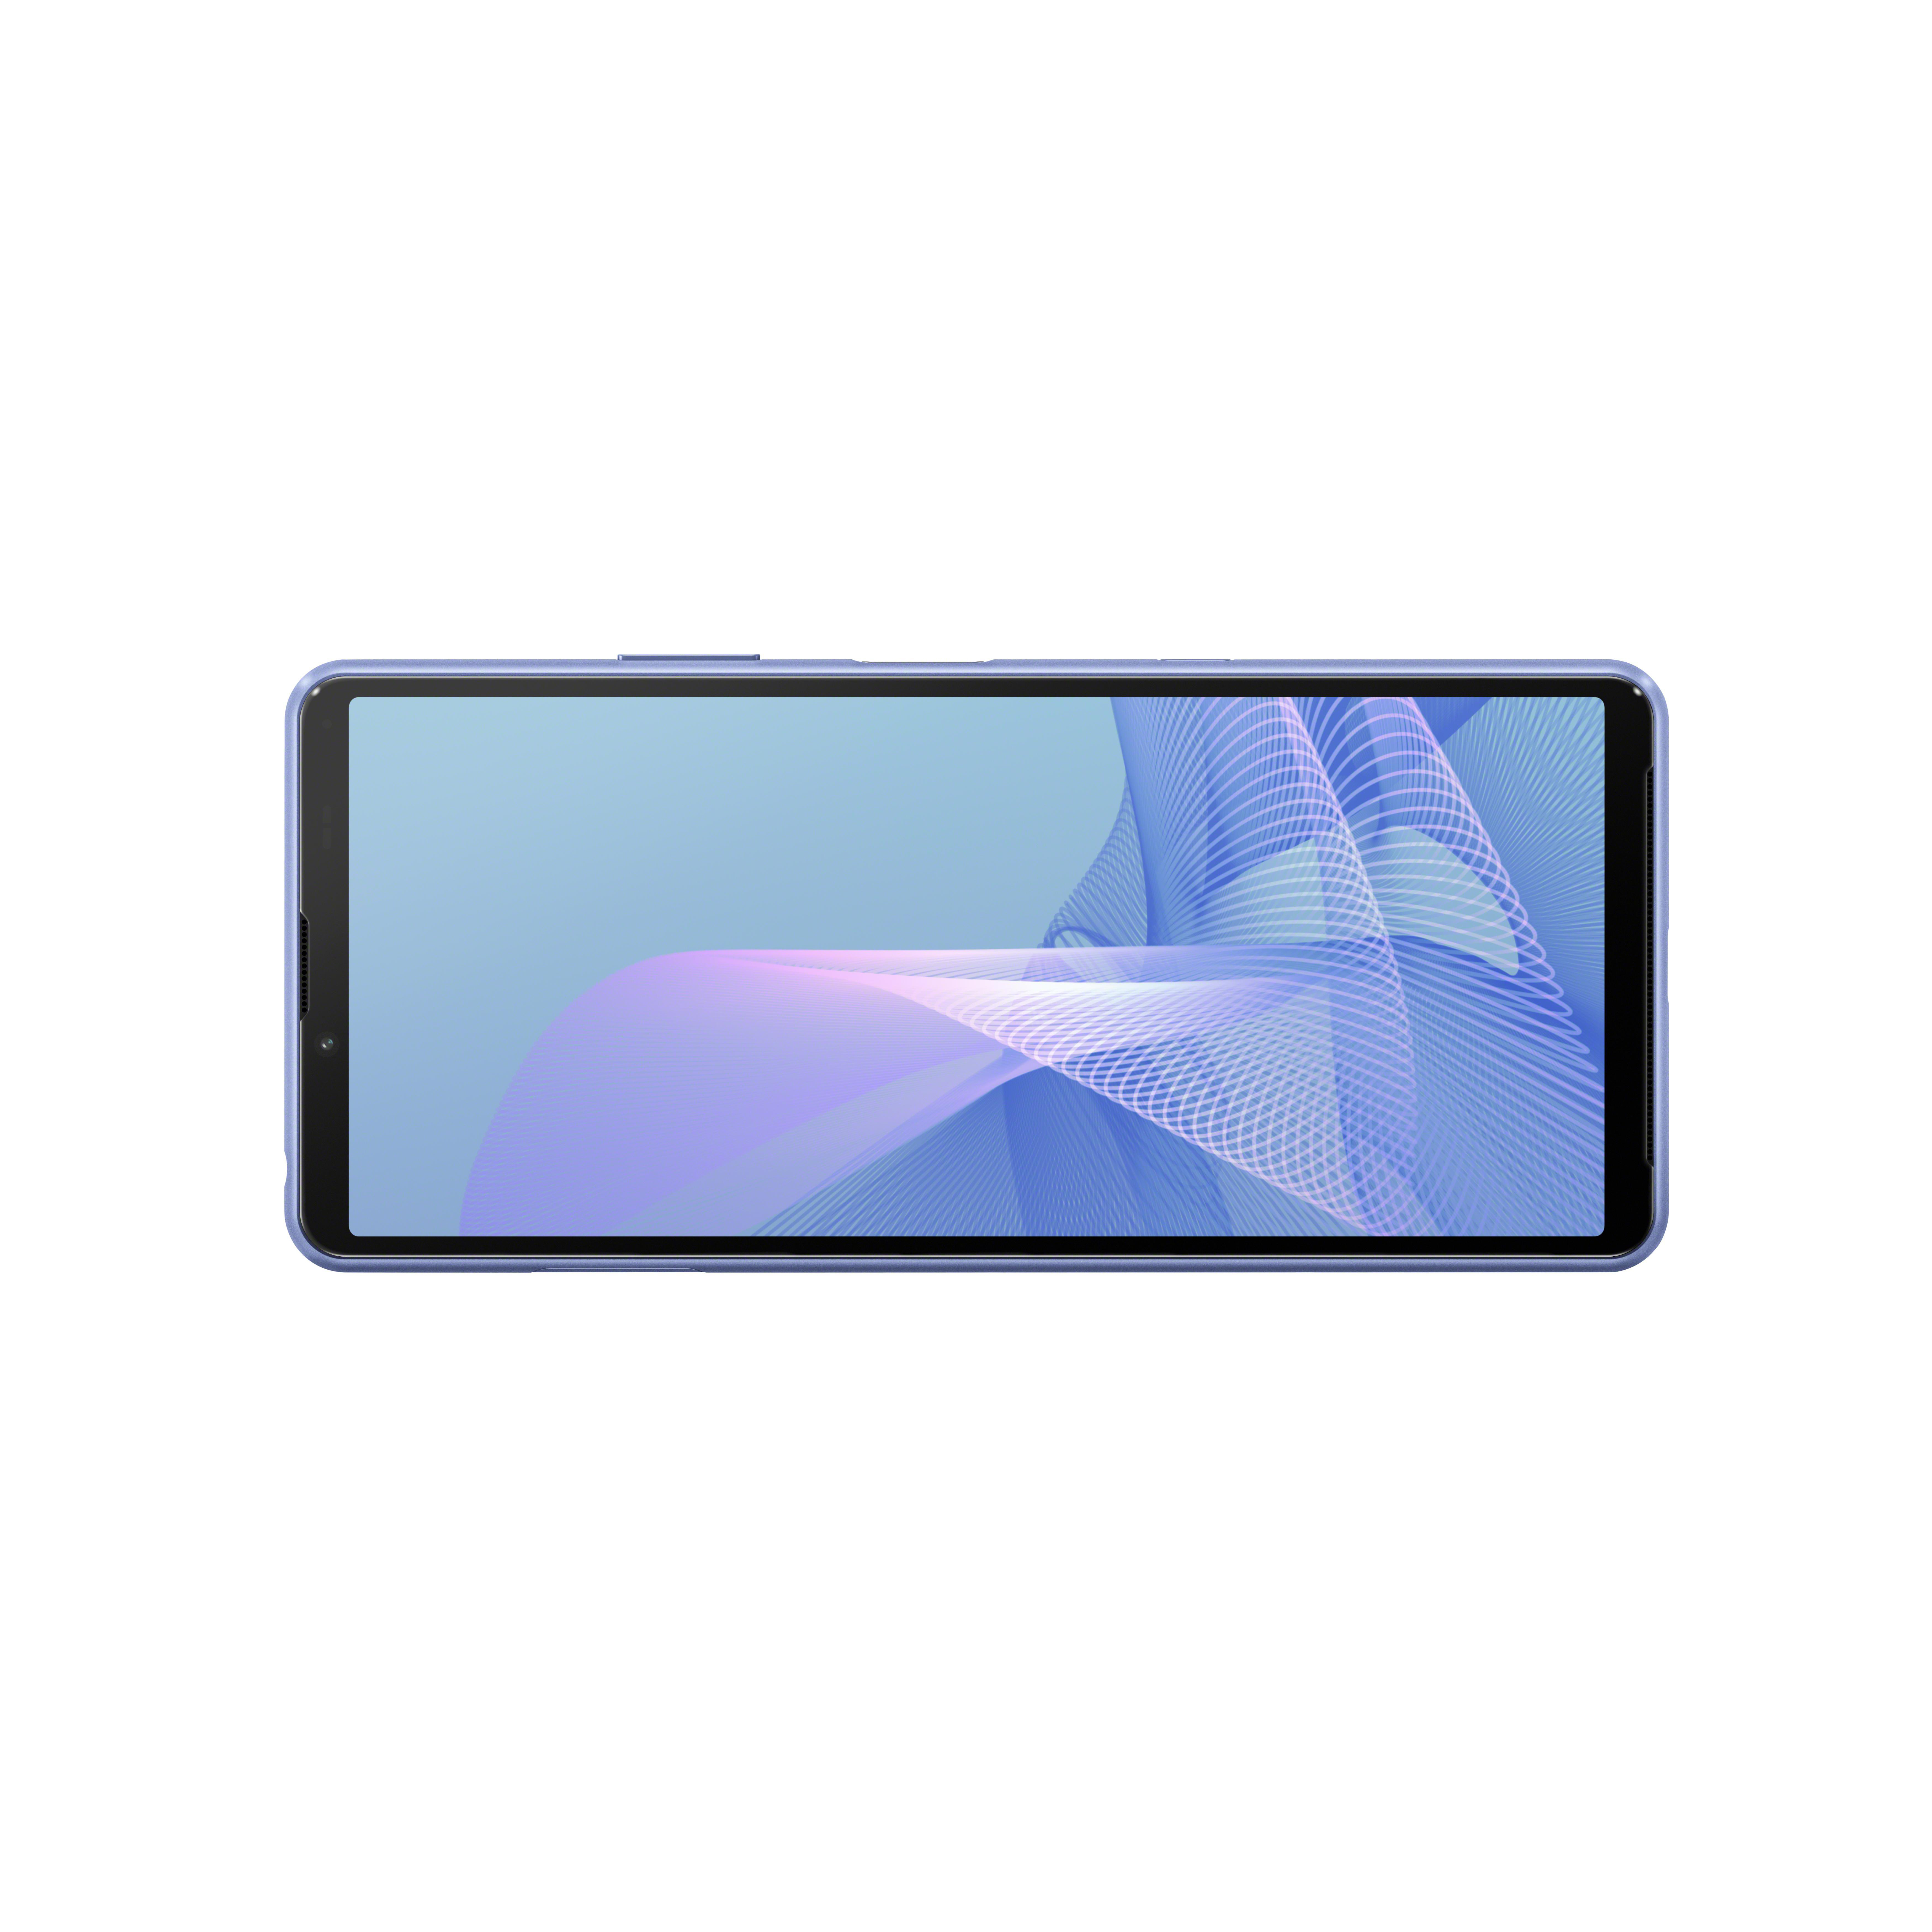 III Dual SONY GB Display 5G Xperia 21:9 10 SIM Blau 128